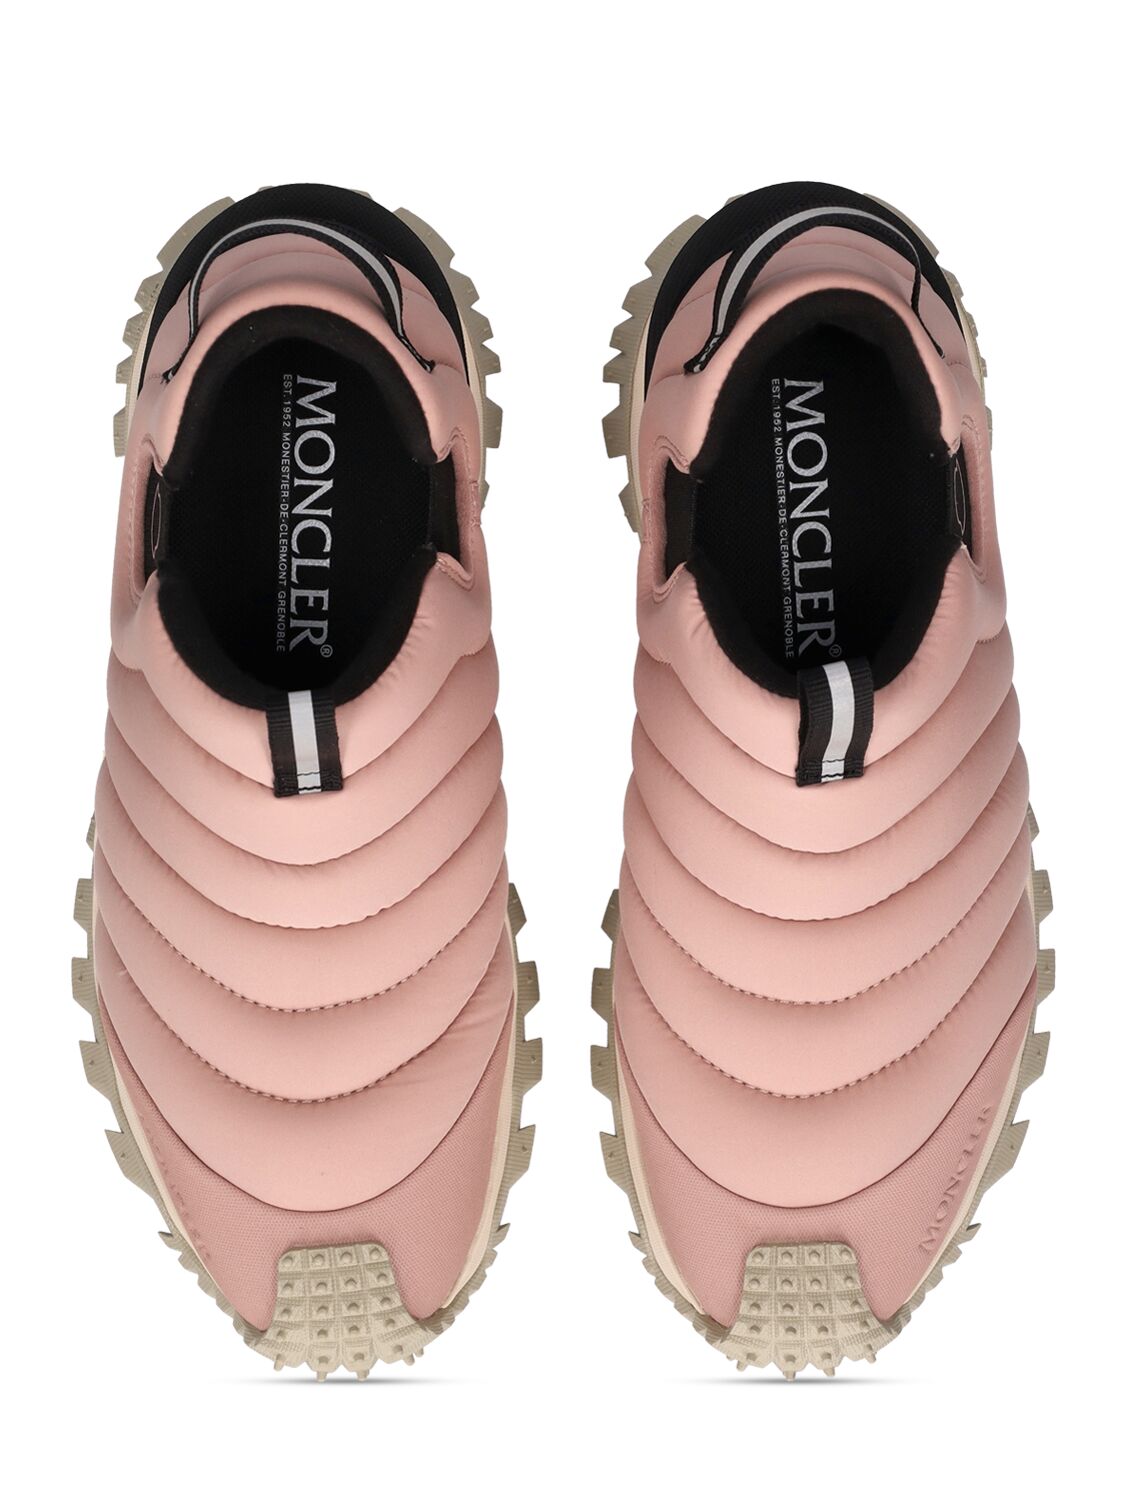 Shop Moncler Trailgrip Après Nylon Sneakers In Grey,pink